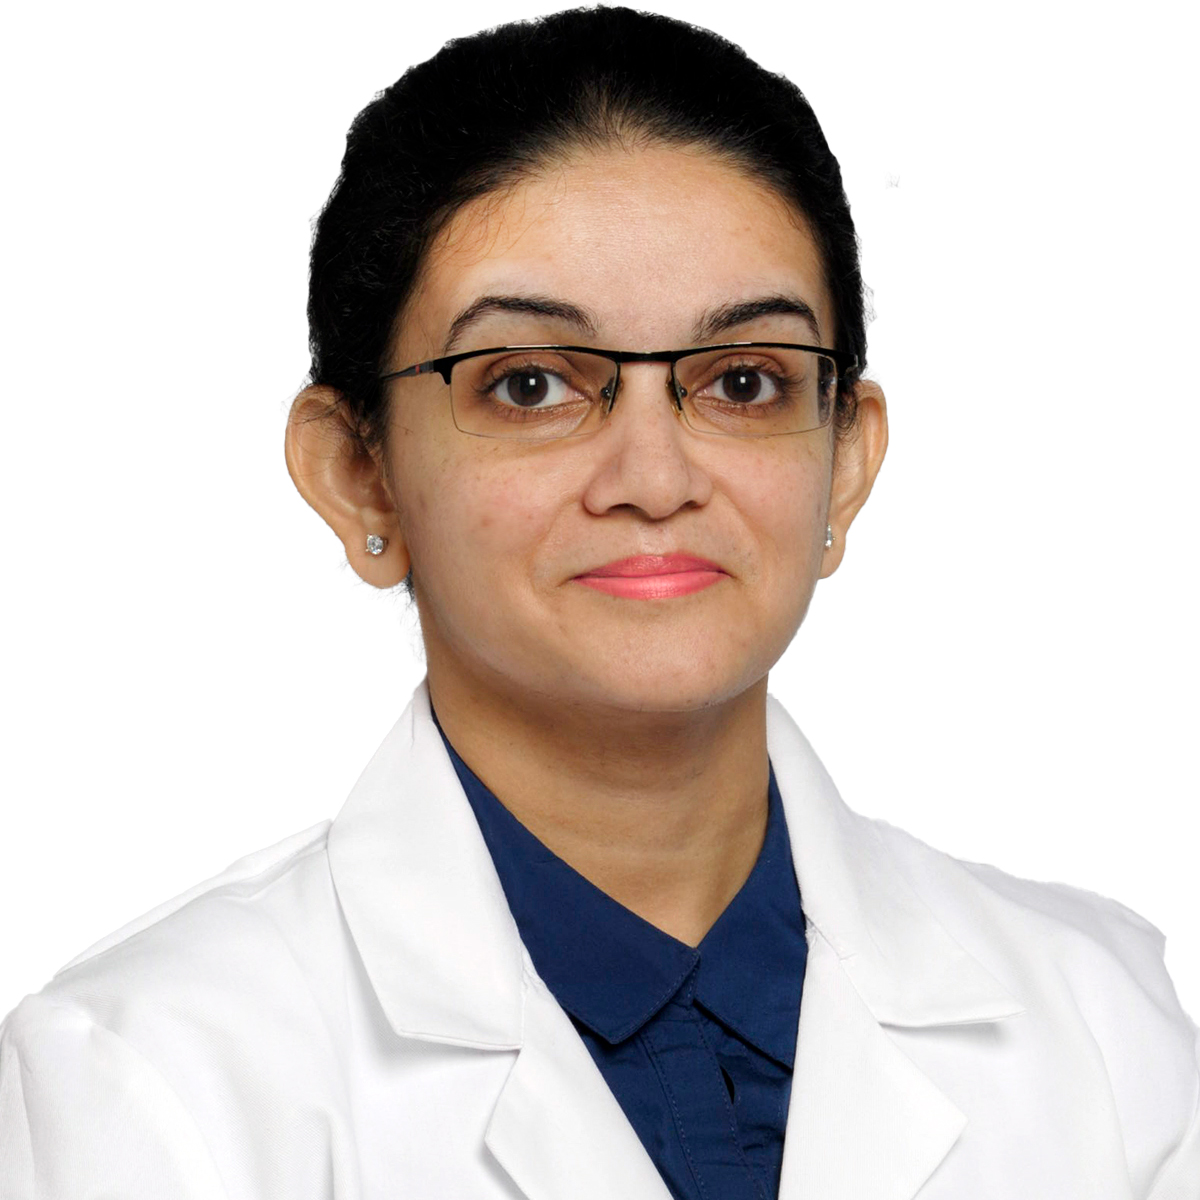 Dr. Rima Chaudhari